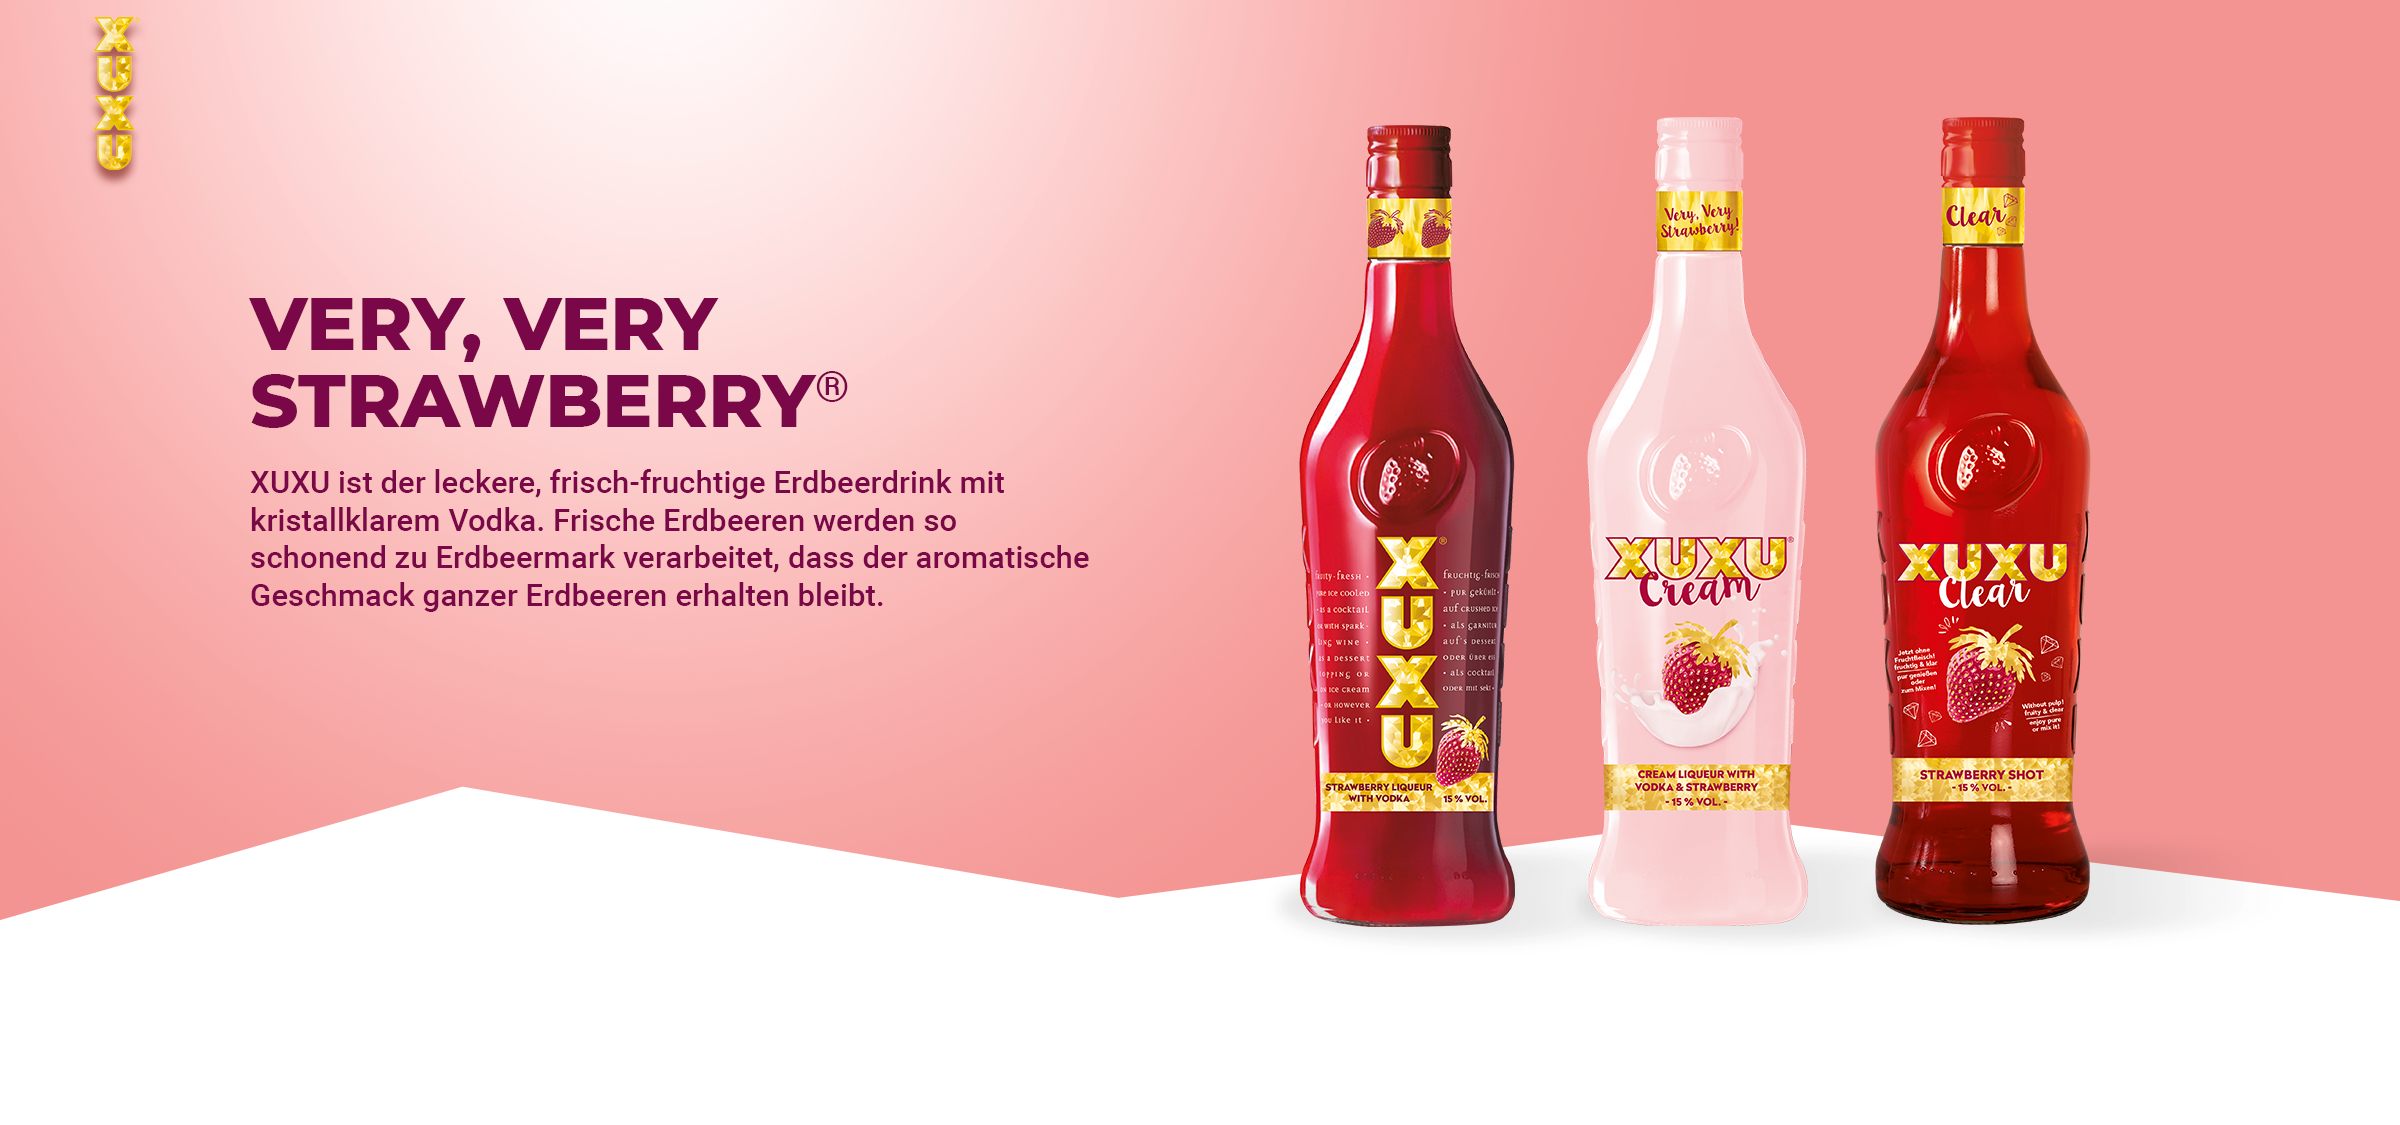 Very, very Strawberry. XUXU Kultgetränke. Packaging und Support by adworx.